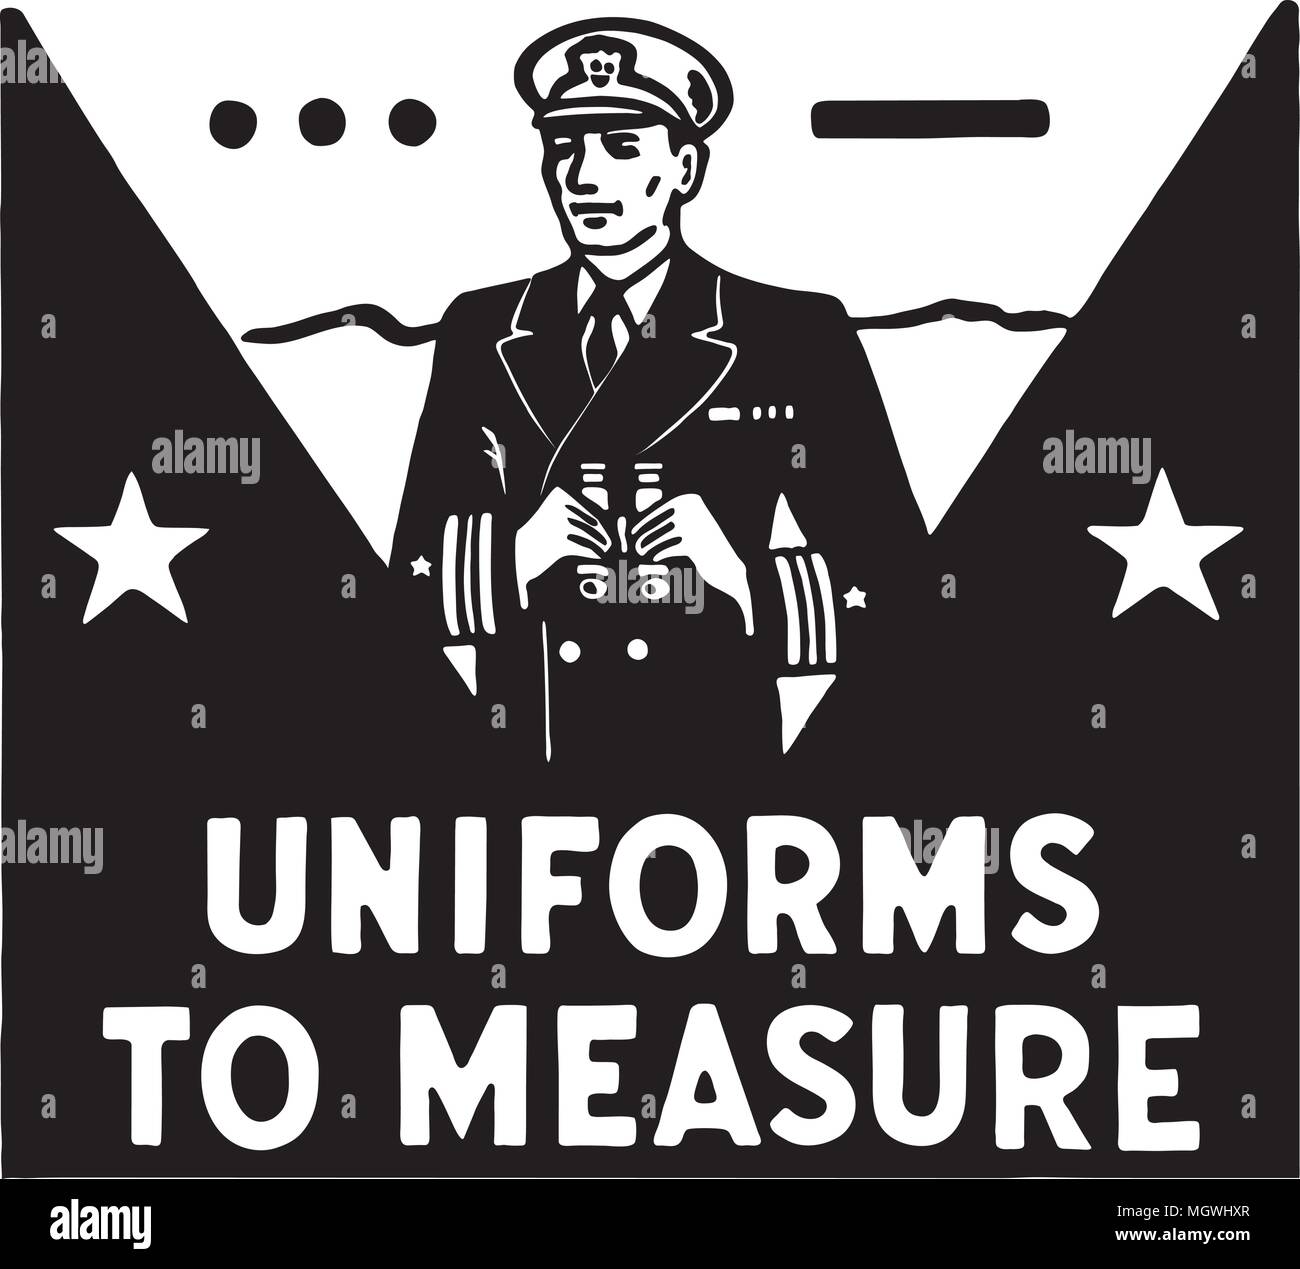 Uniforms To Measure - Retro Ad Art Banner Stock Vector